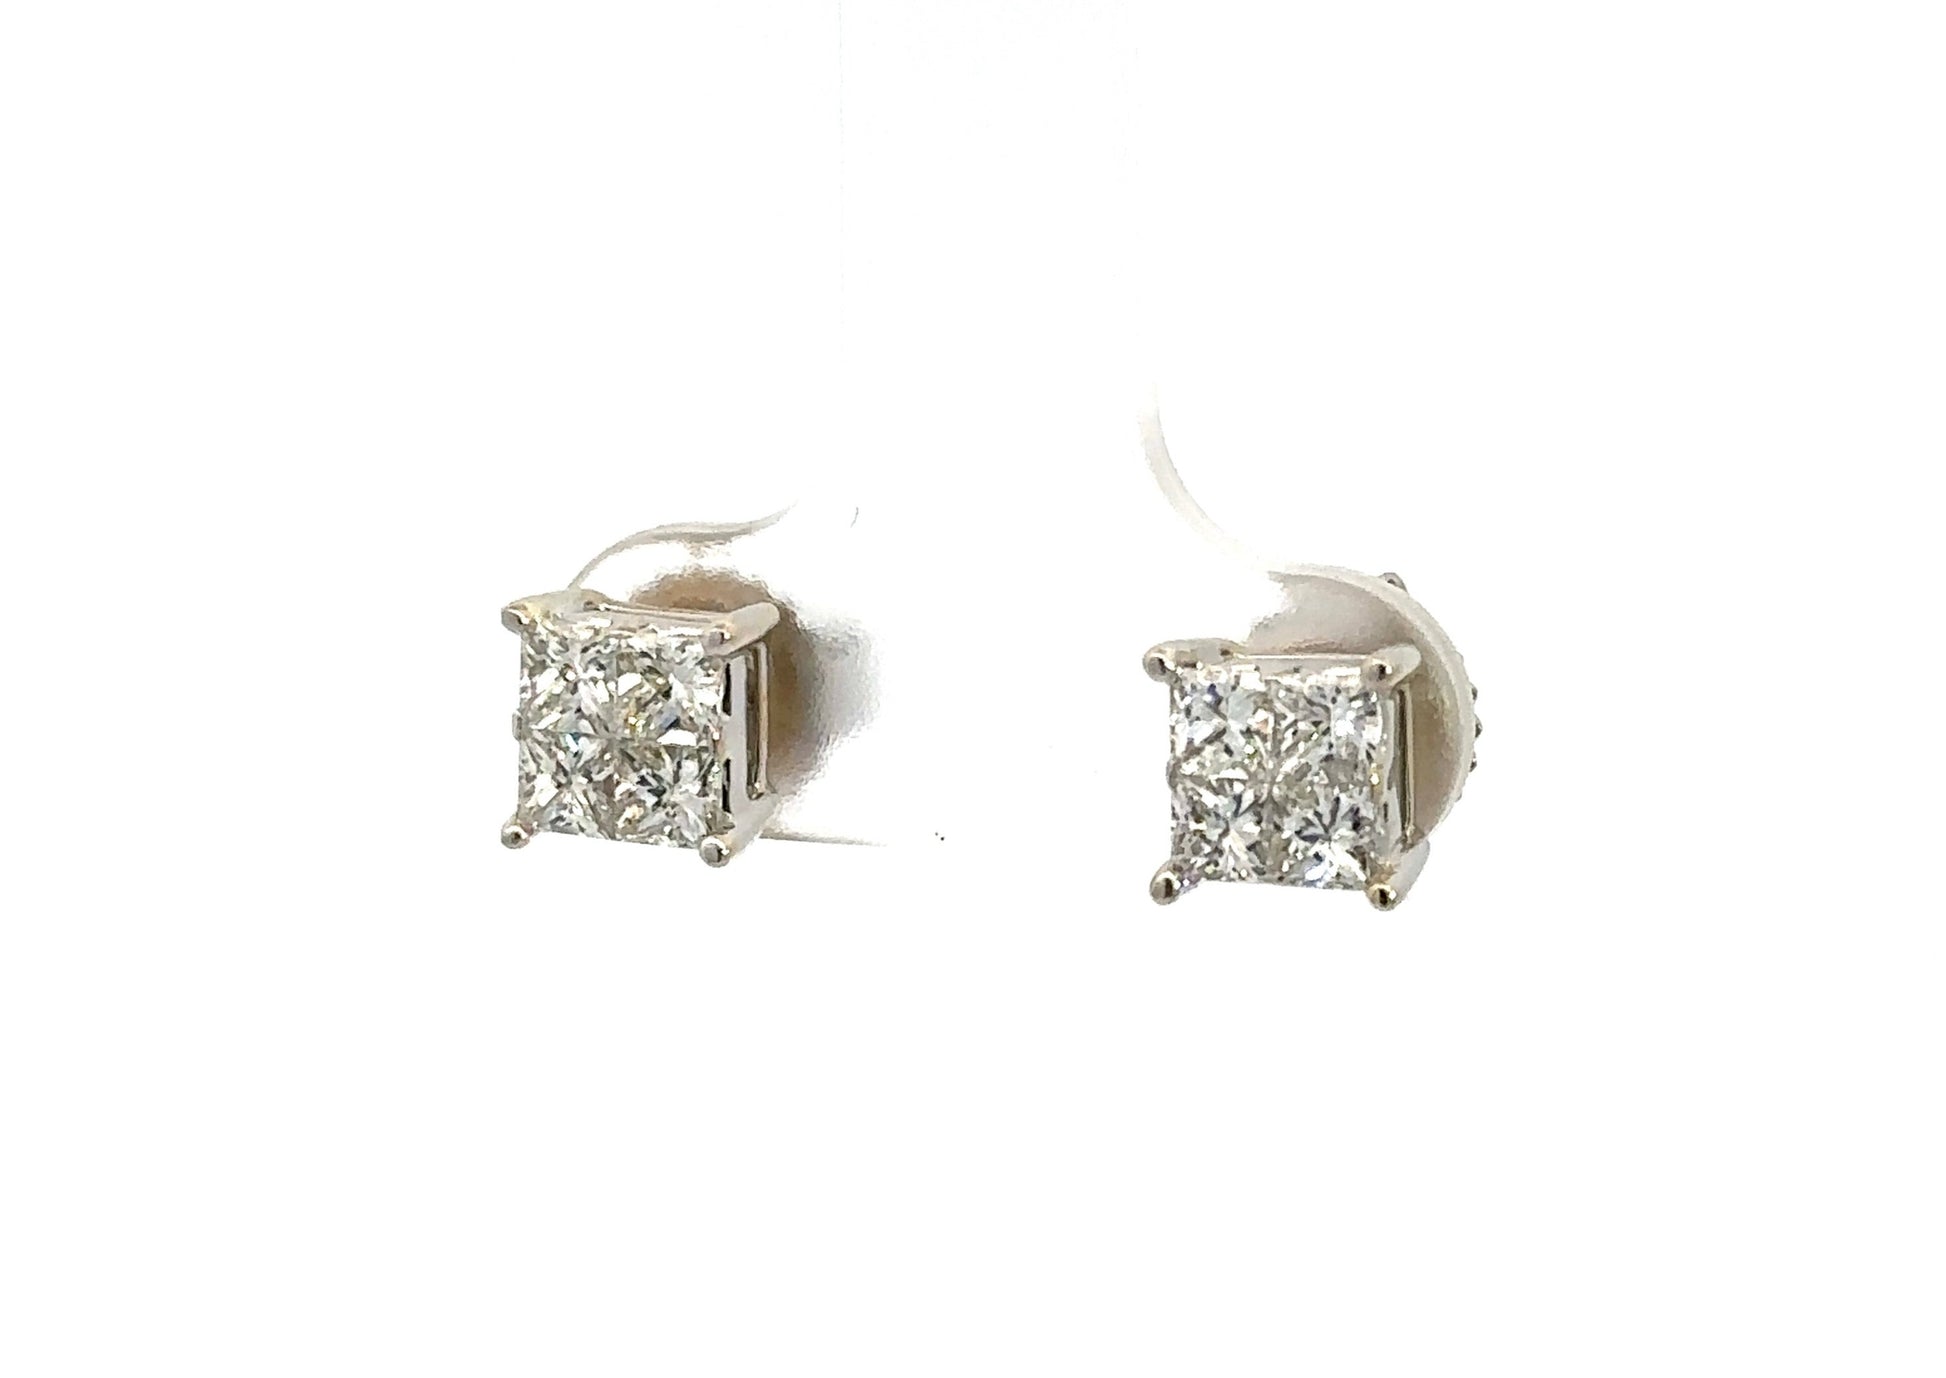 Diagonal view of princess-cut diamond earrings